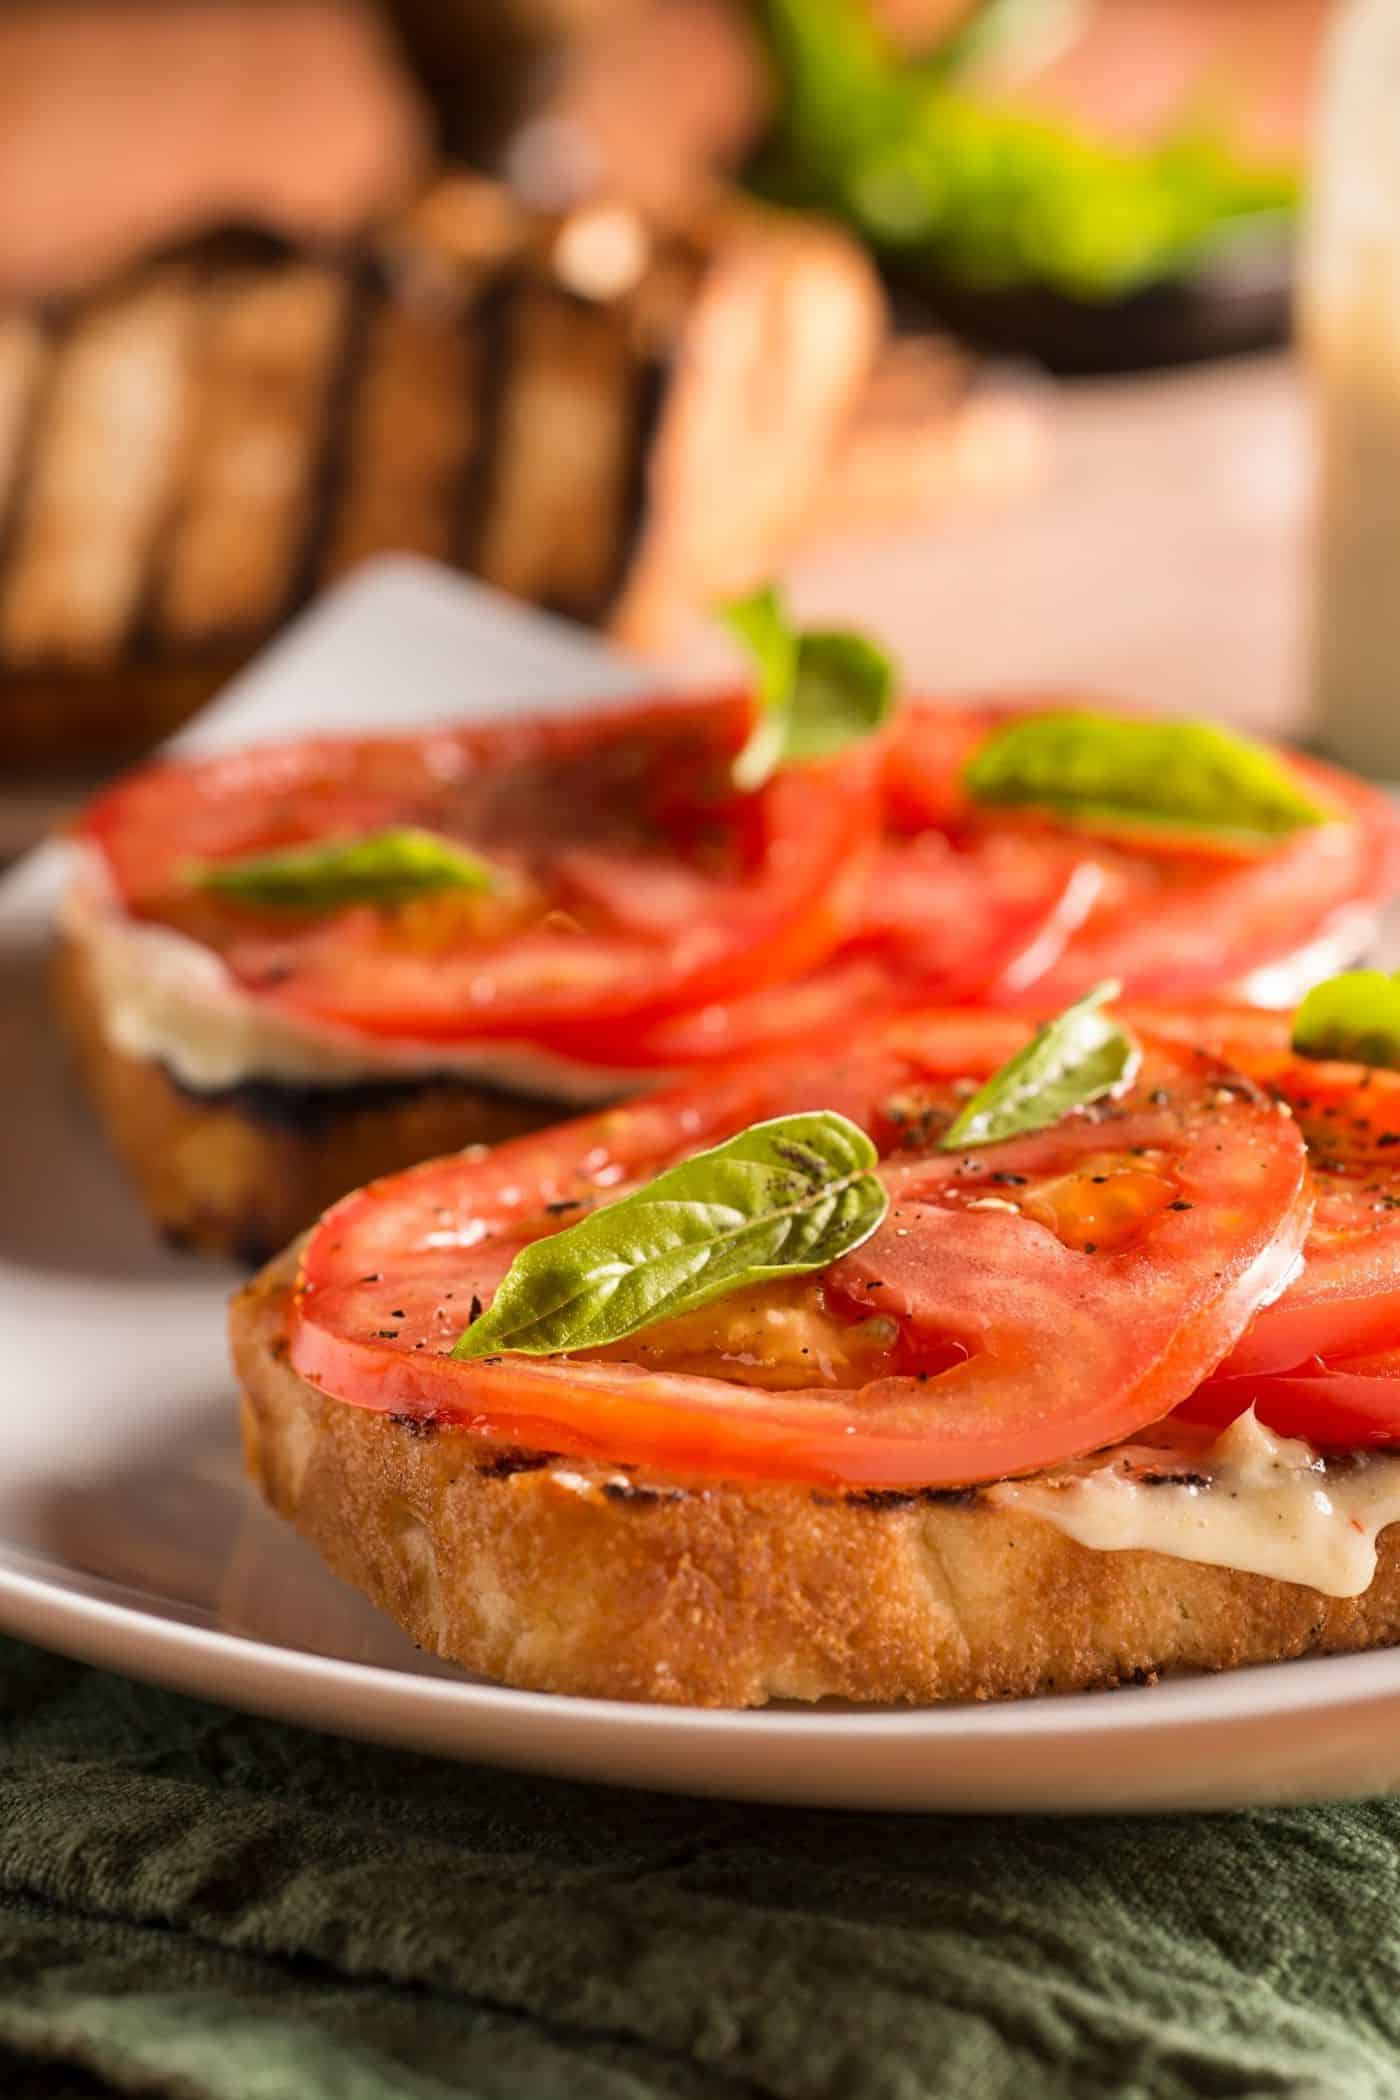 Heirloom tomatoes on toast (open-faced sandwich)